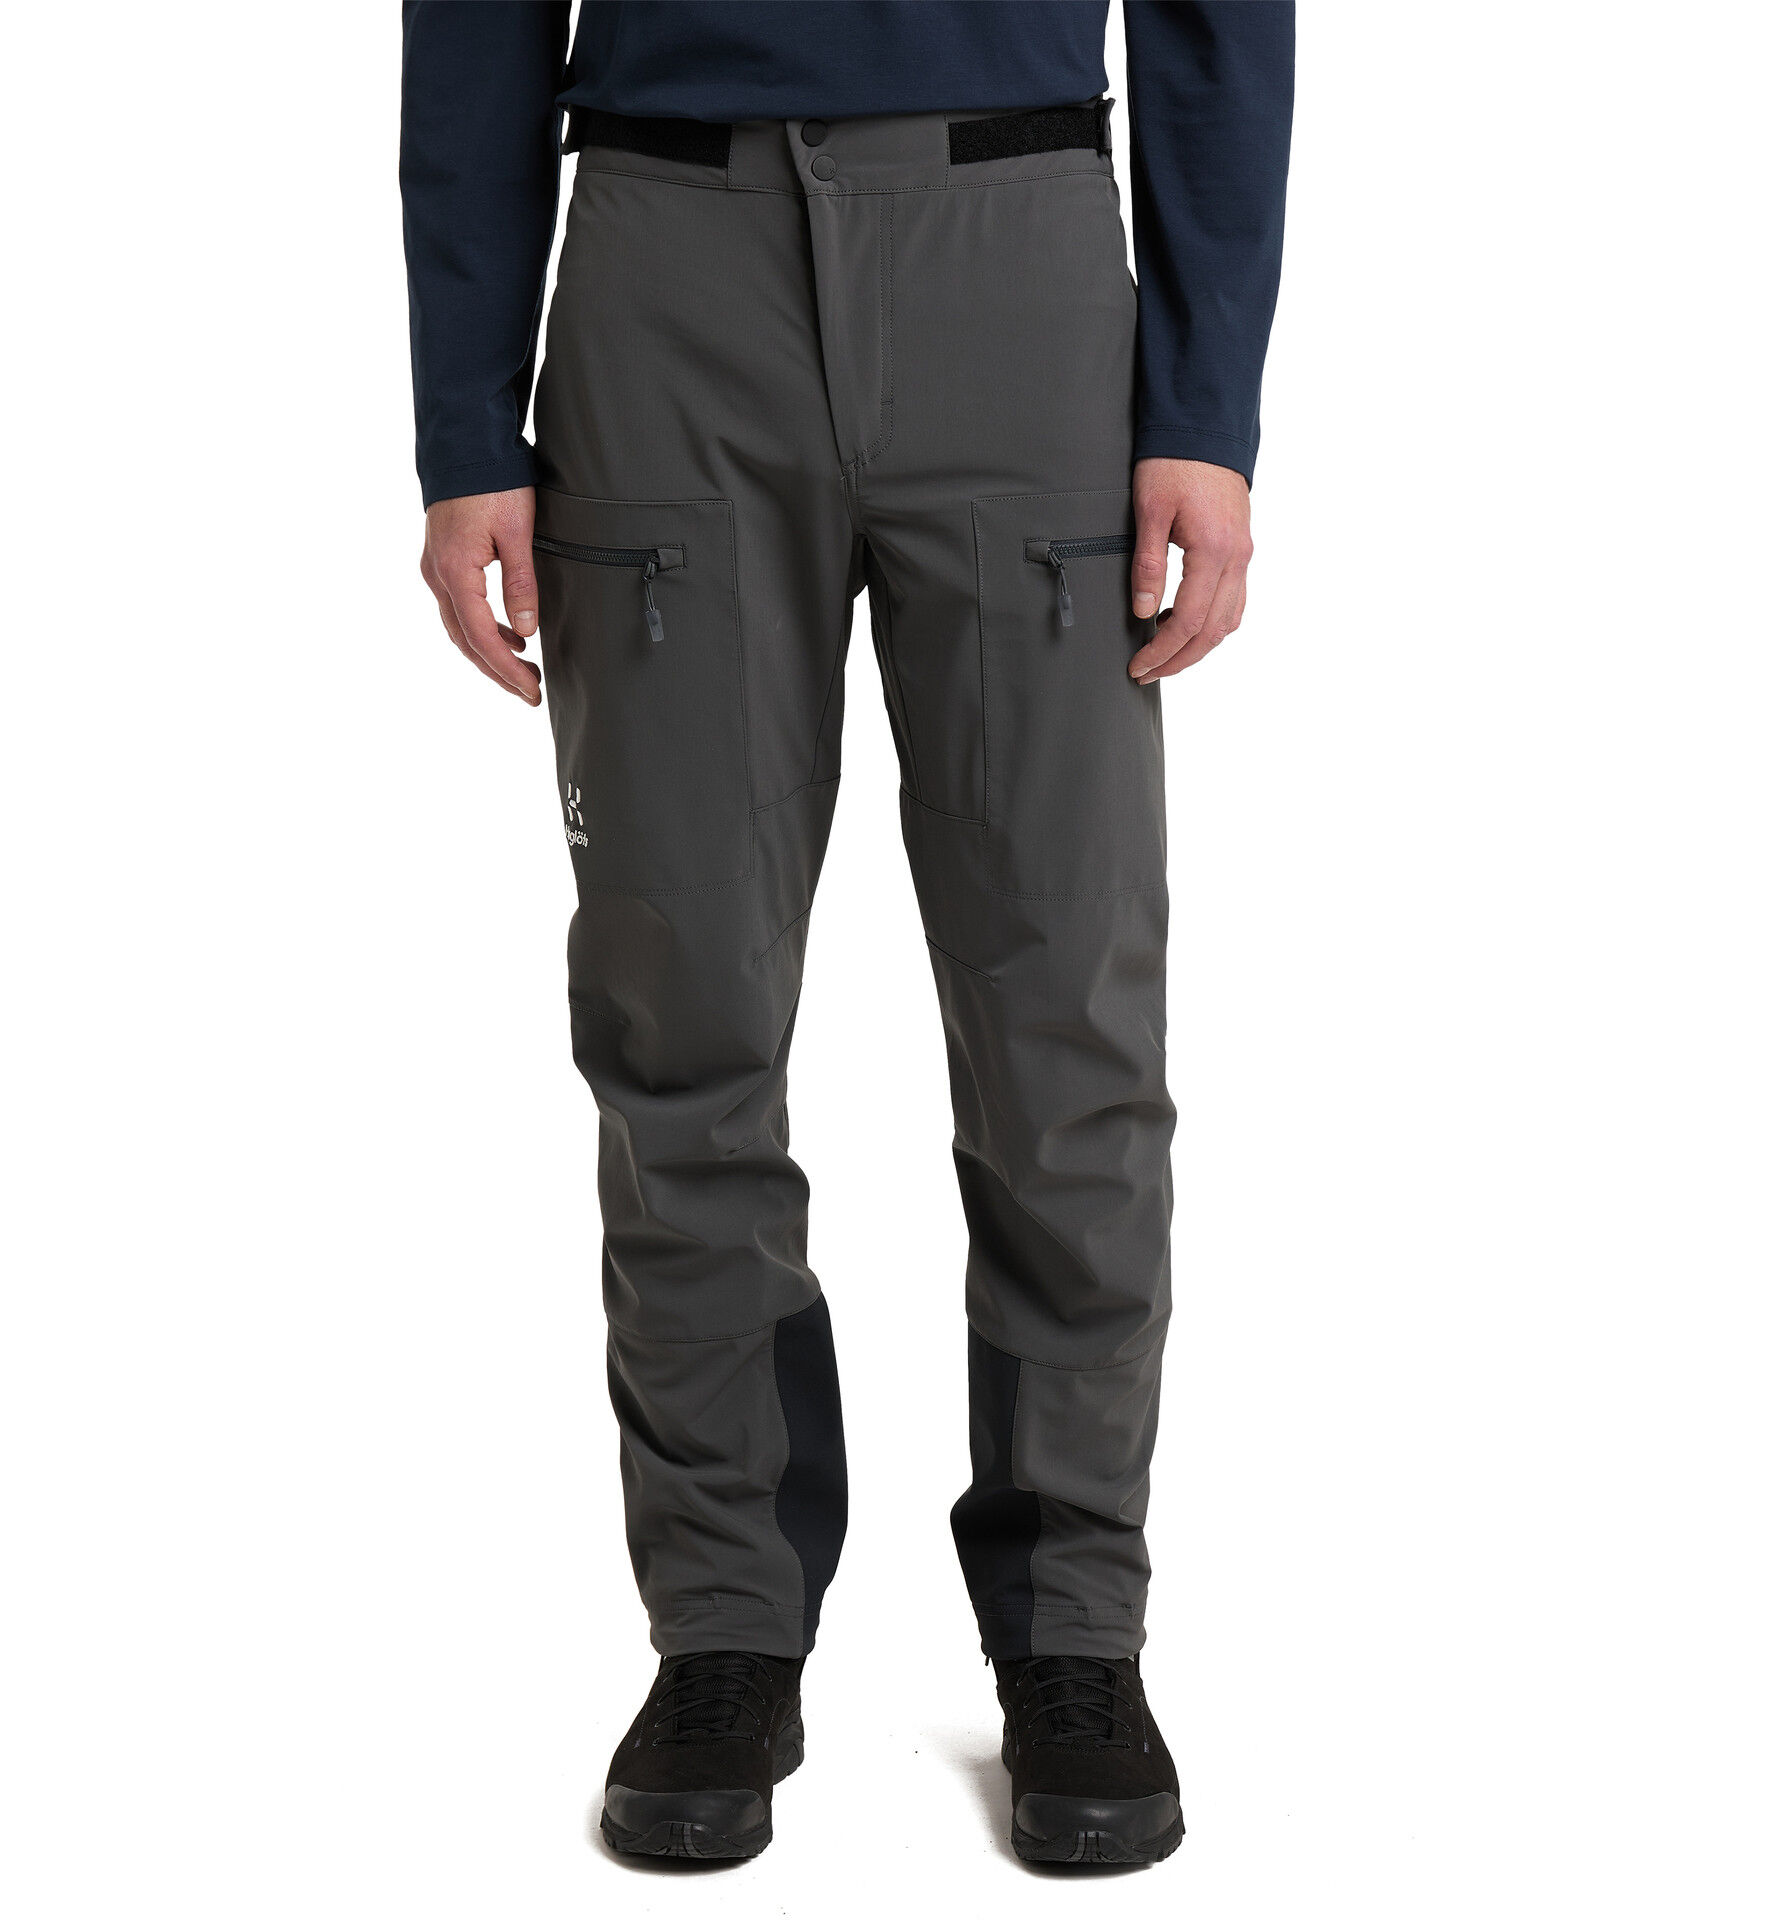 Haglöfs Roc Sight Softshell Pant - Mountaineering trousers - Men's